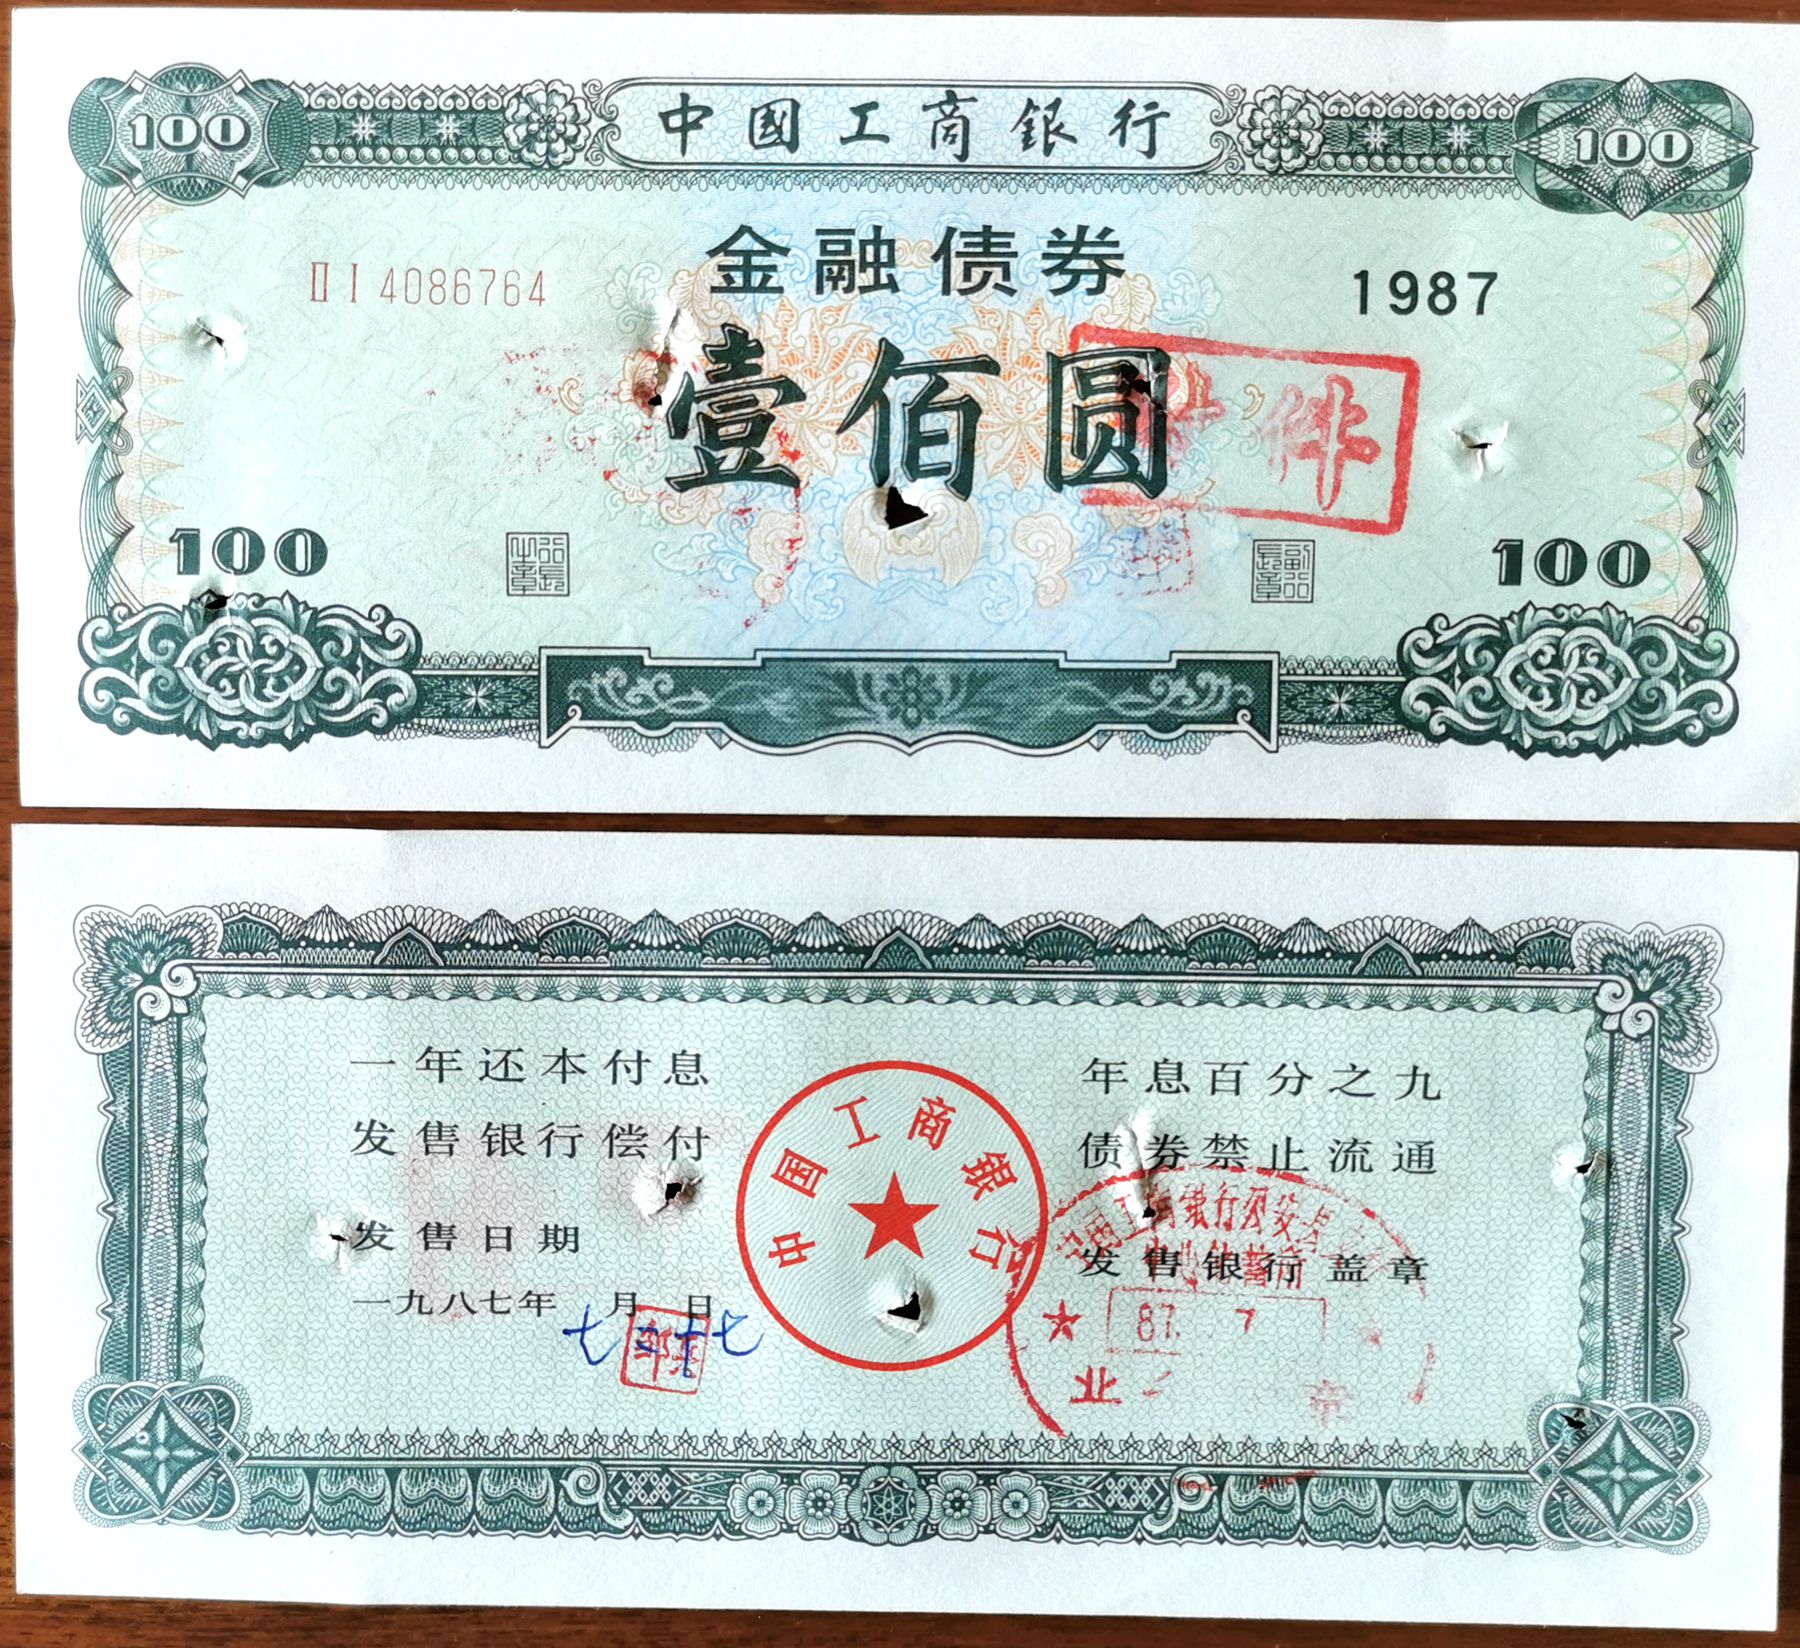 B7370, ICBC Bank of China, 9%, 1 Year Finance Bond 100 Yuan, 1987